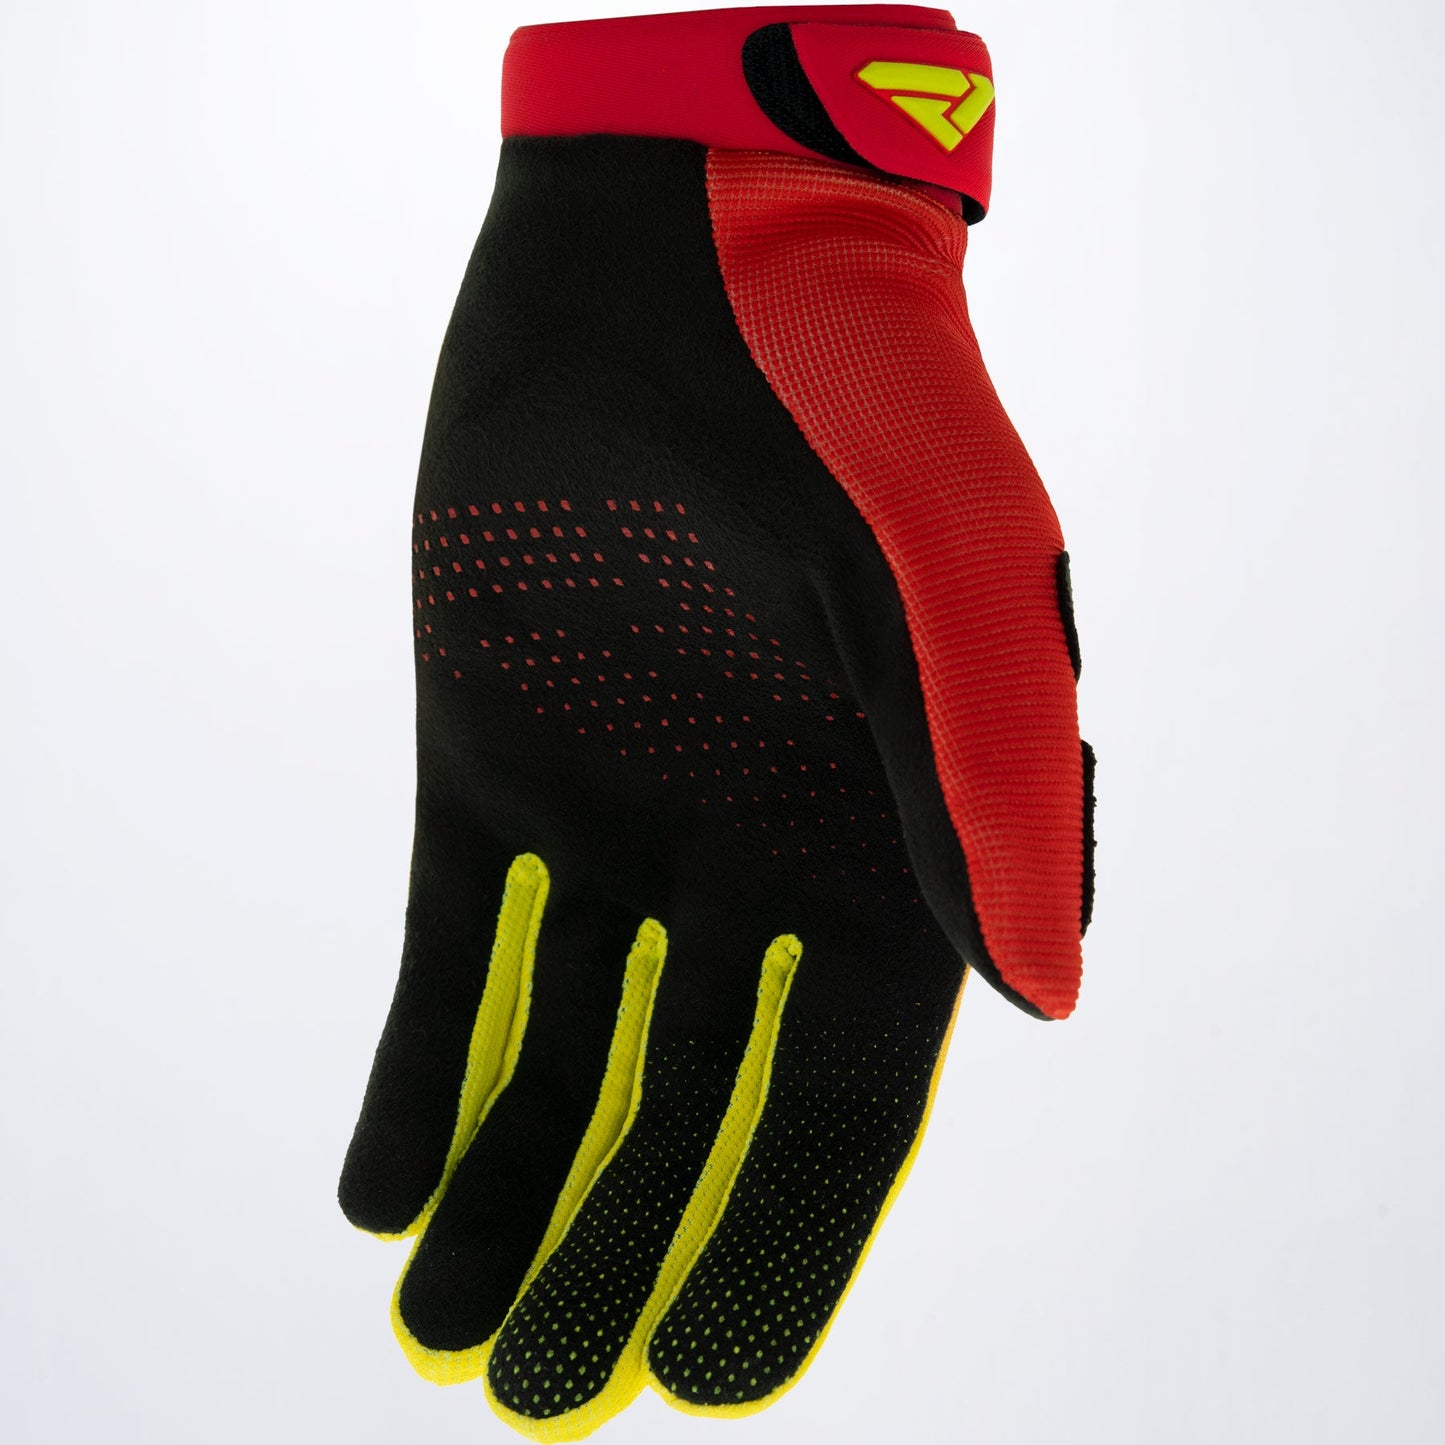 FXR Reflex MX Gloves